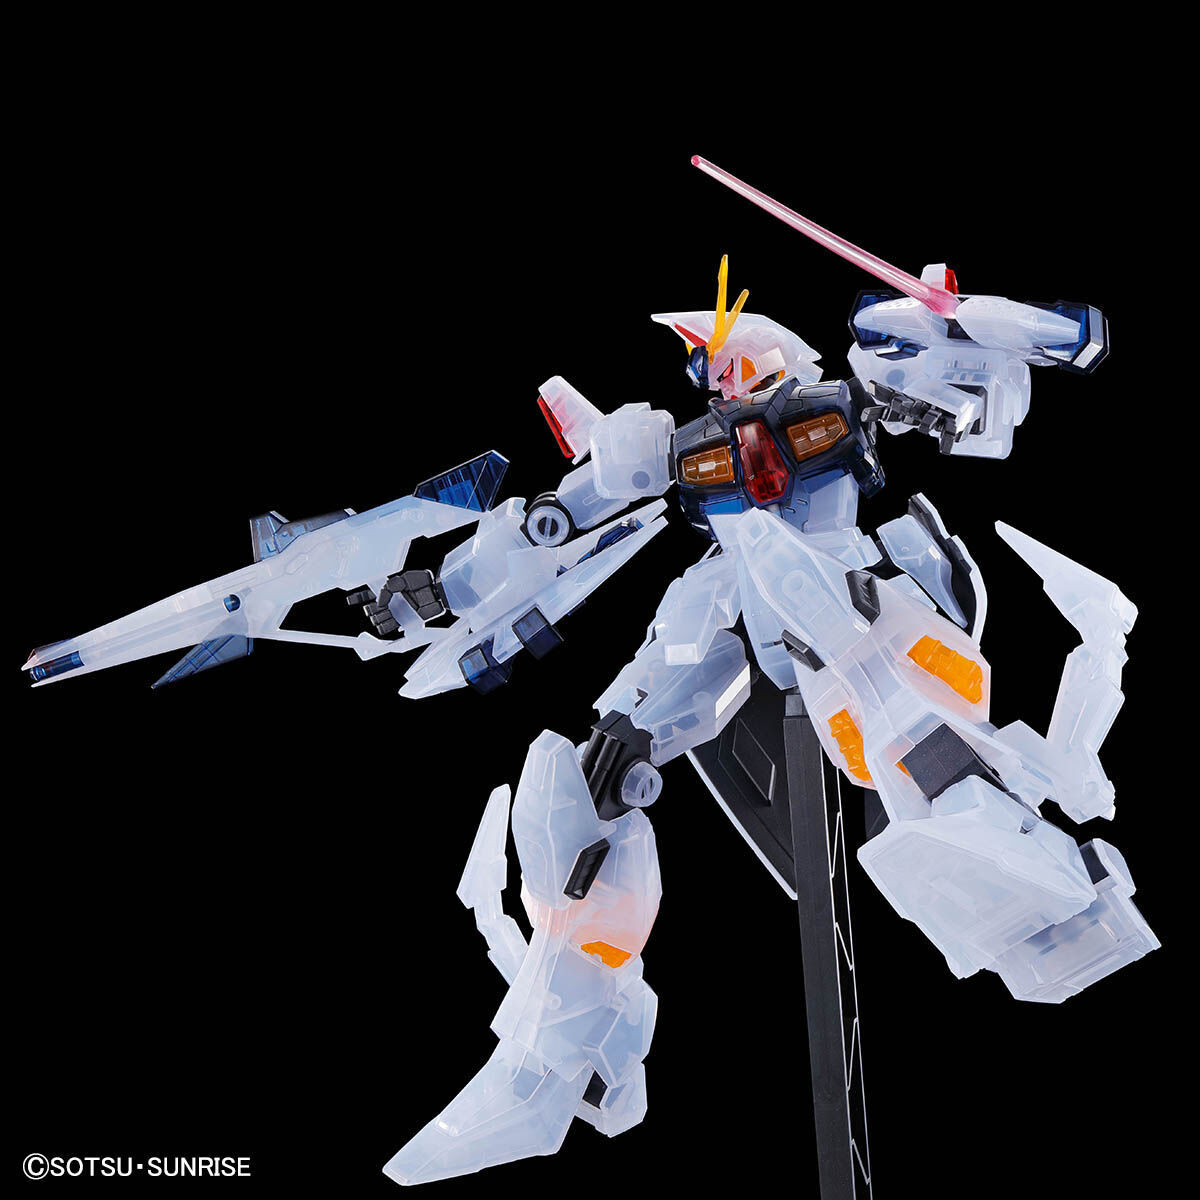 HGUC 1/144 RX-104FF Penelope(Odysseus Gundam+Fixed Flight Unit)(Clear Color)